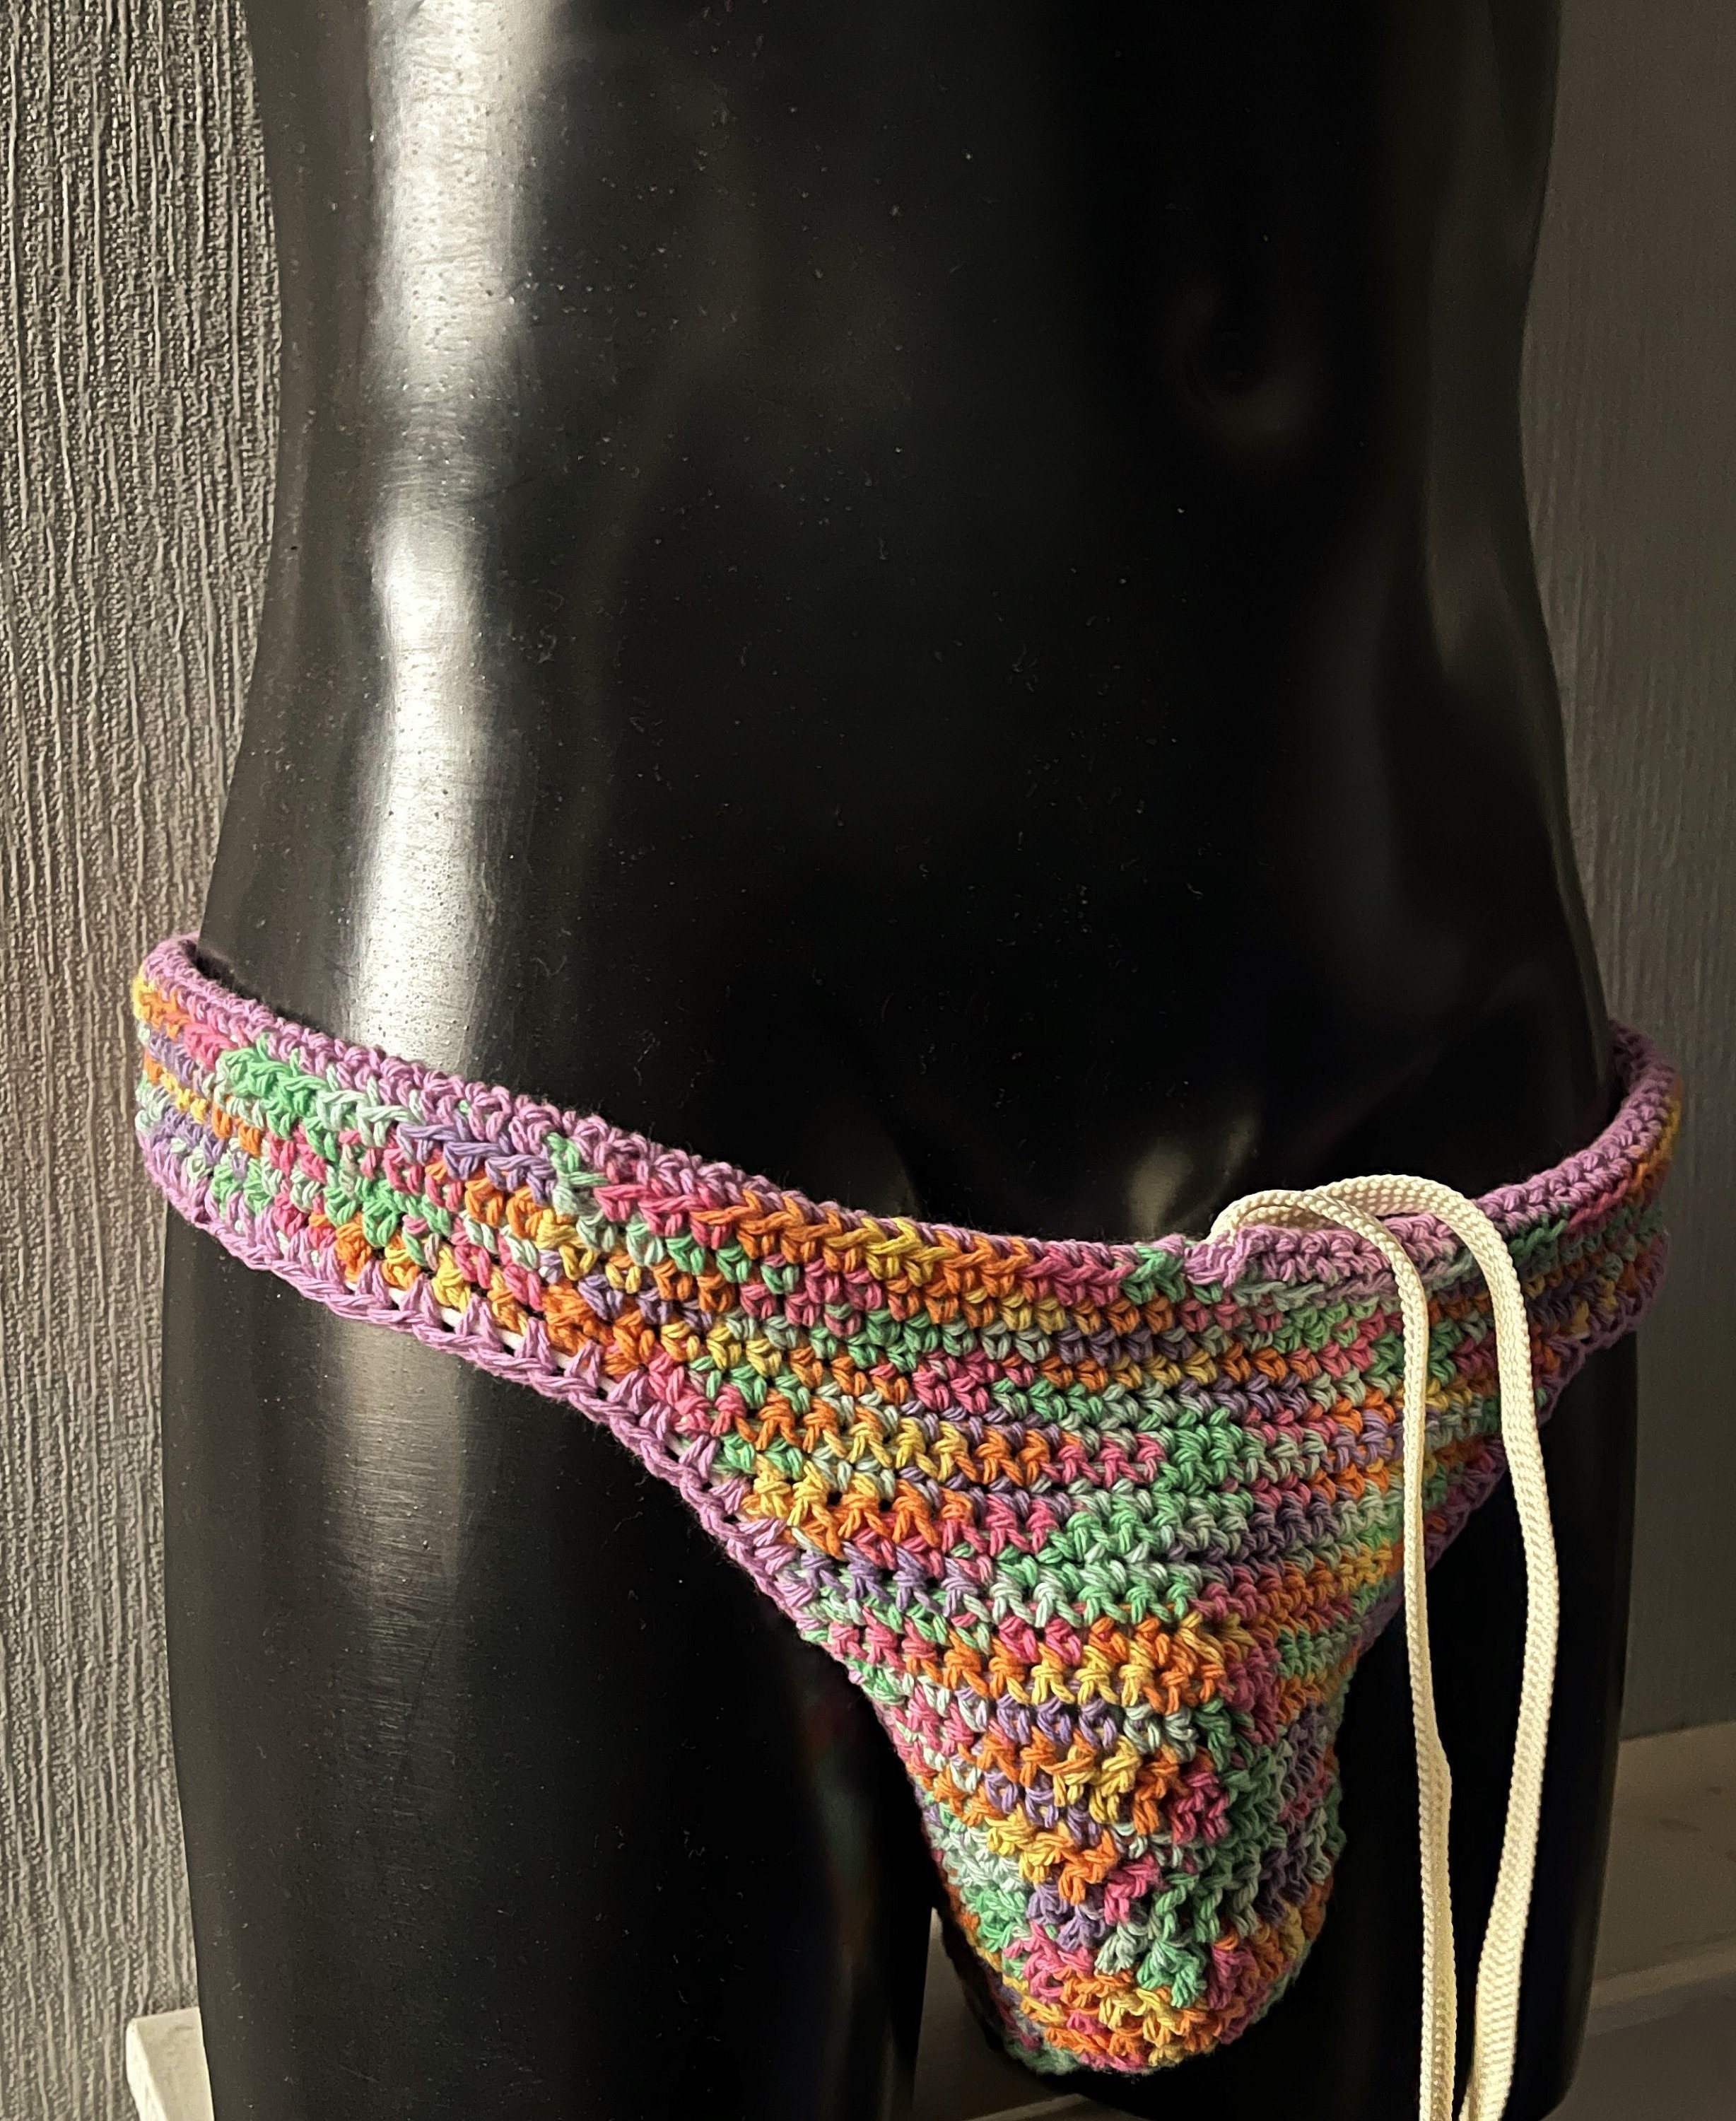 Men's Crochet Pattern, 1001 Worsted Weight Briefs 